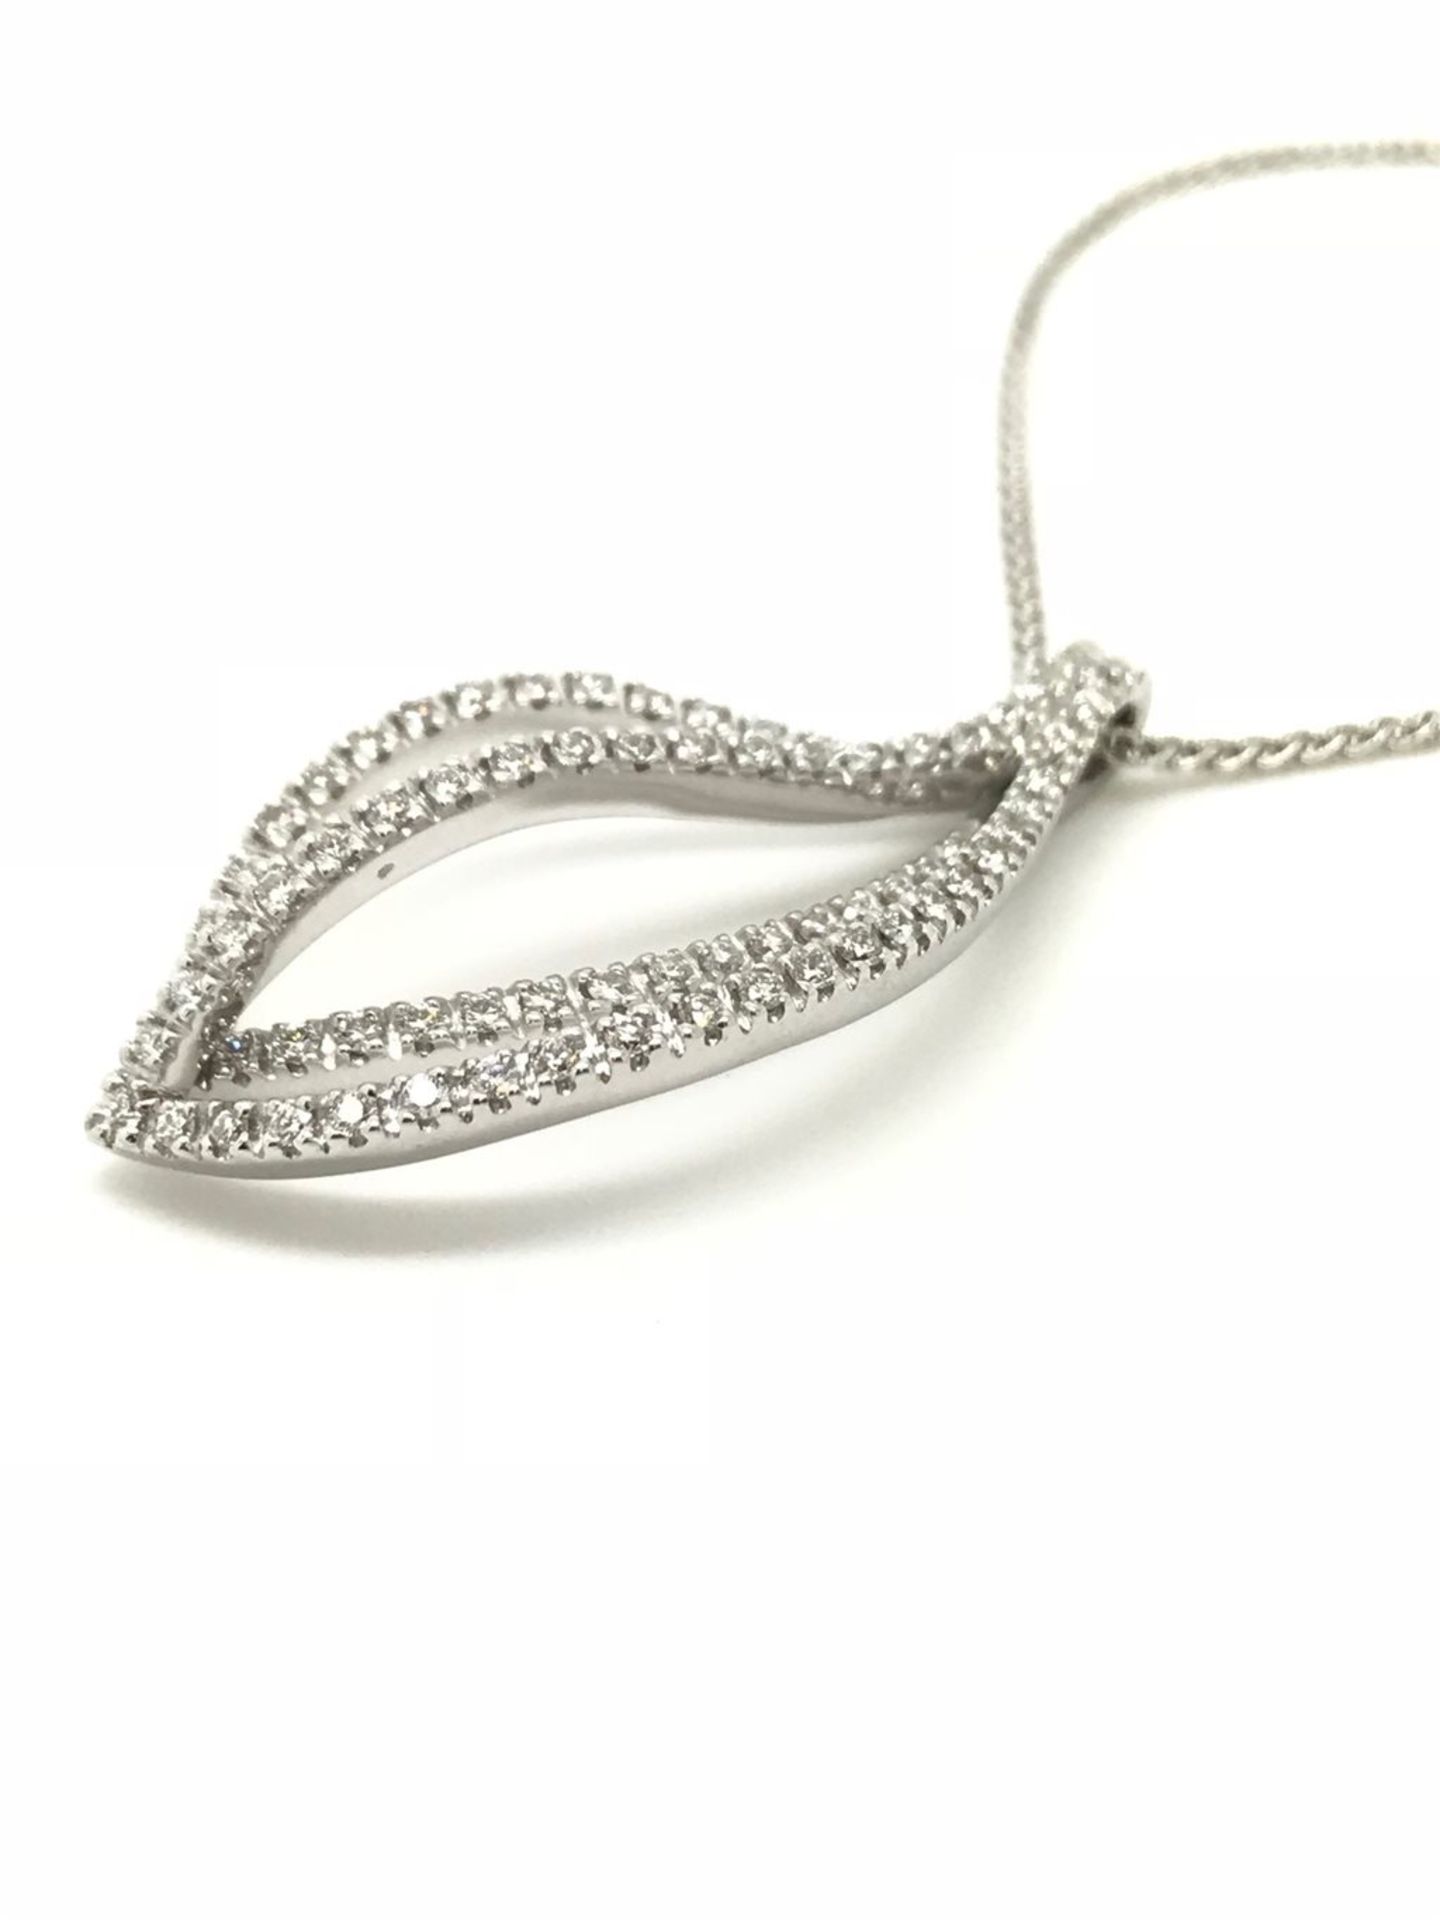 0.56ct Diamond 'Recarlo' Leaf Pendant, 18ct White Gold - Image 2 of 4